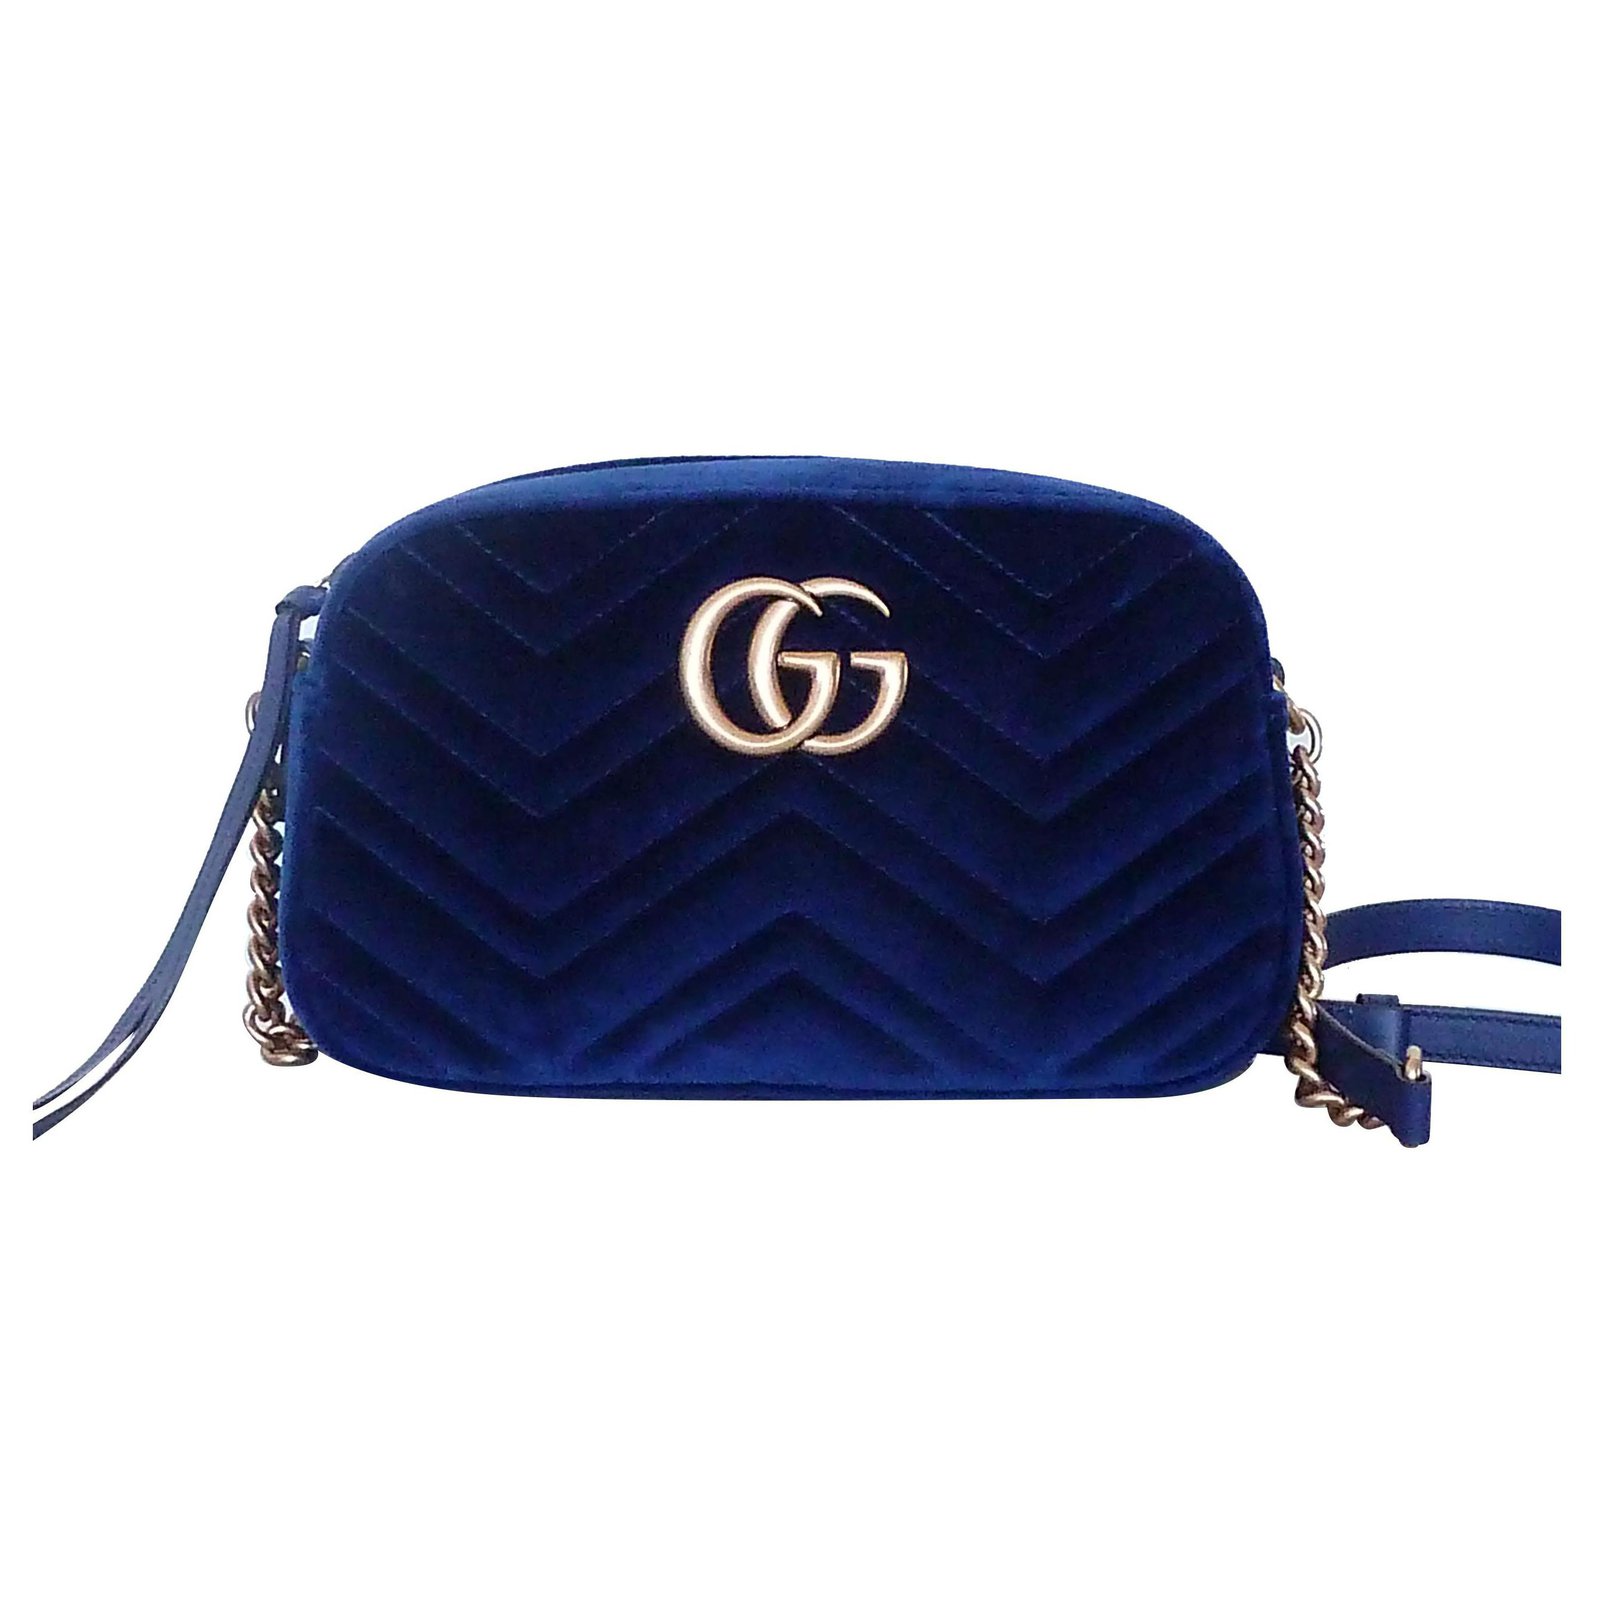 Gucci GUCCI MARMONT VELVET BAG Handbags 